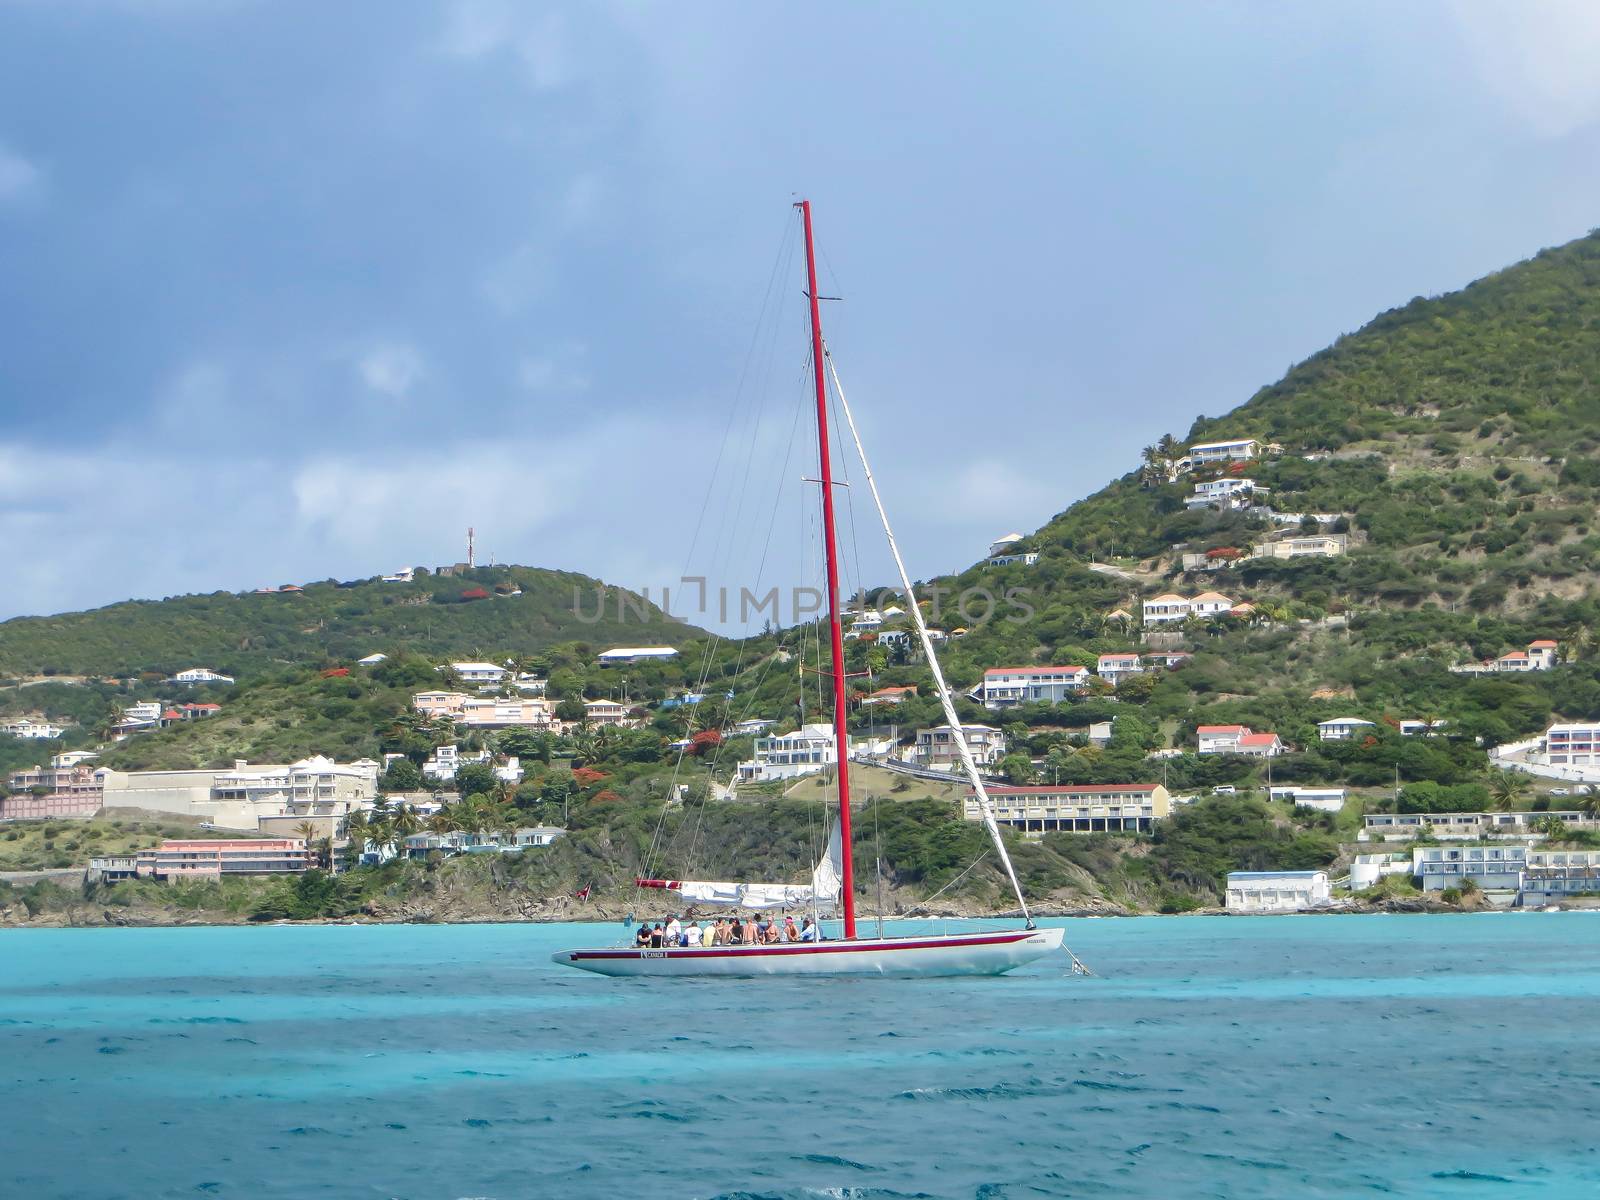 Sailing in St. Maarten by teacherdad48@yahoo.com